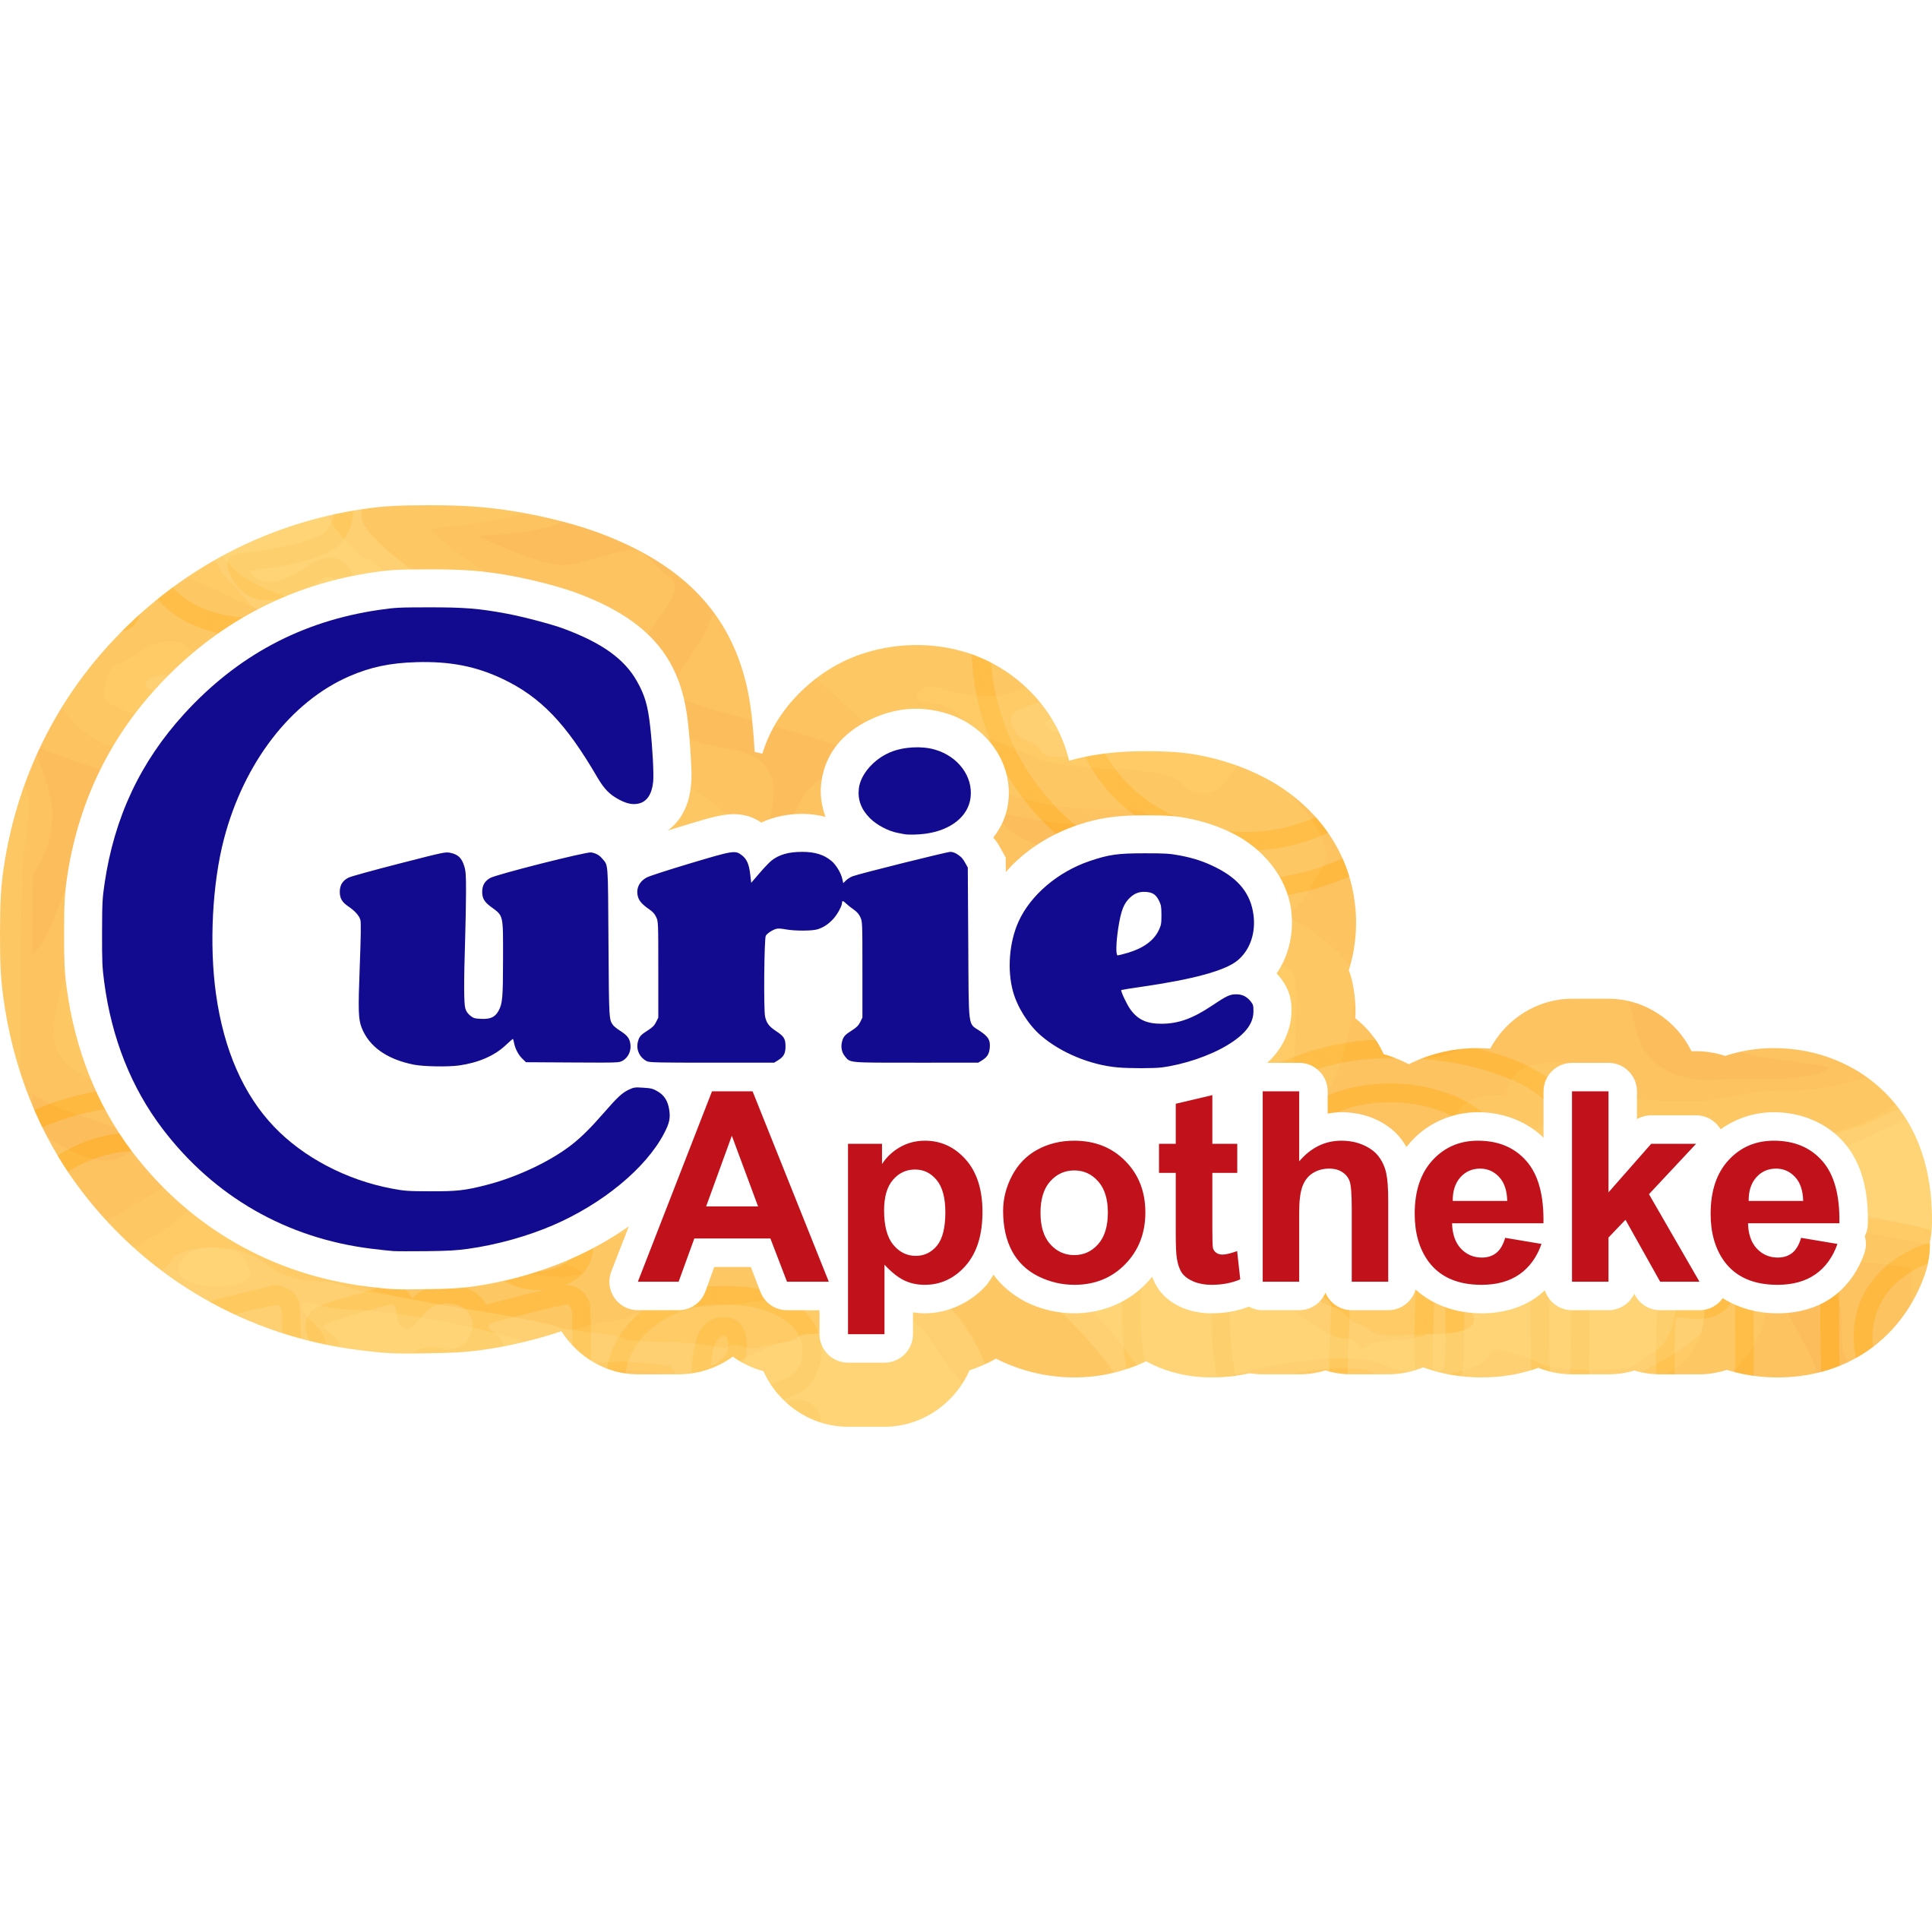 Curie-Apotheke Leopoldshafen - Pharmacy - Eggenstein-Leopoldshafen - 07247 21610 Germany | ShowMeLocal.com